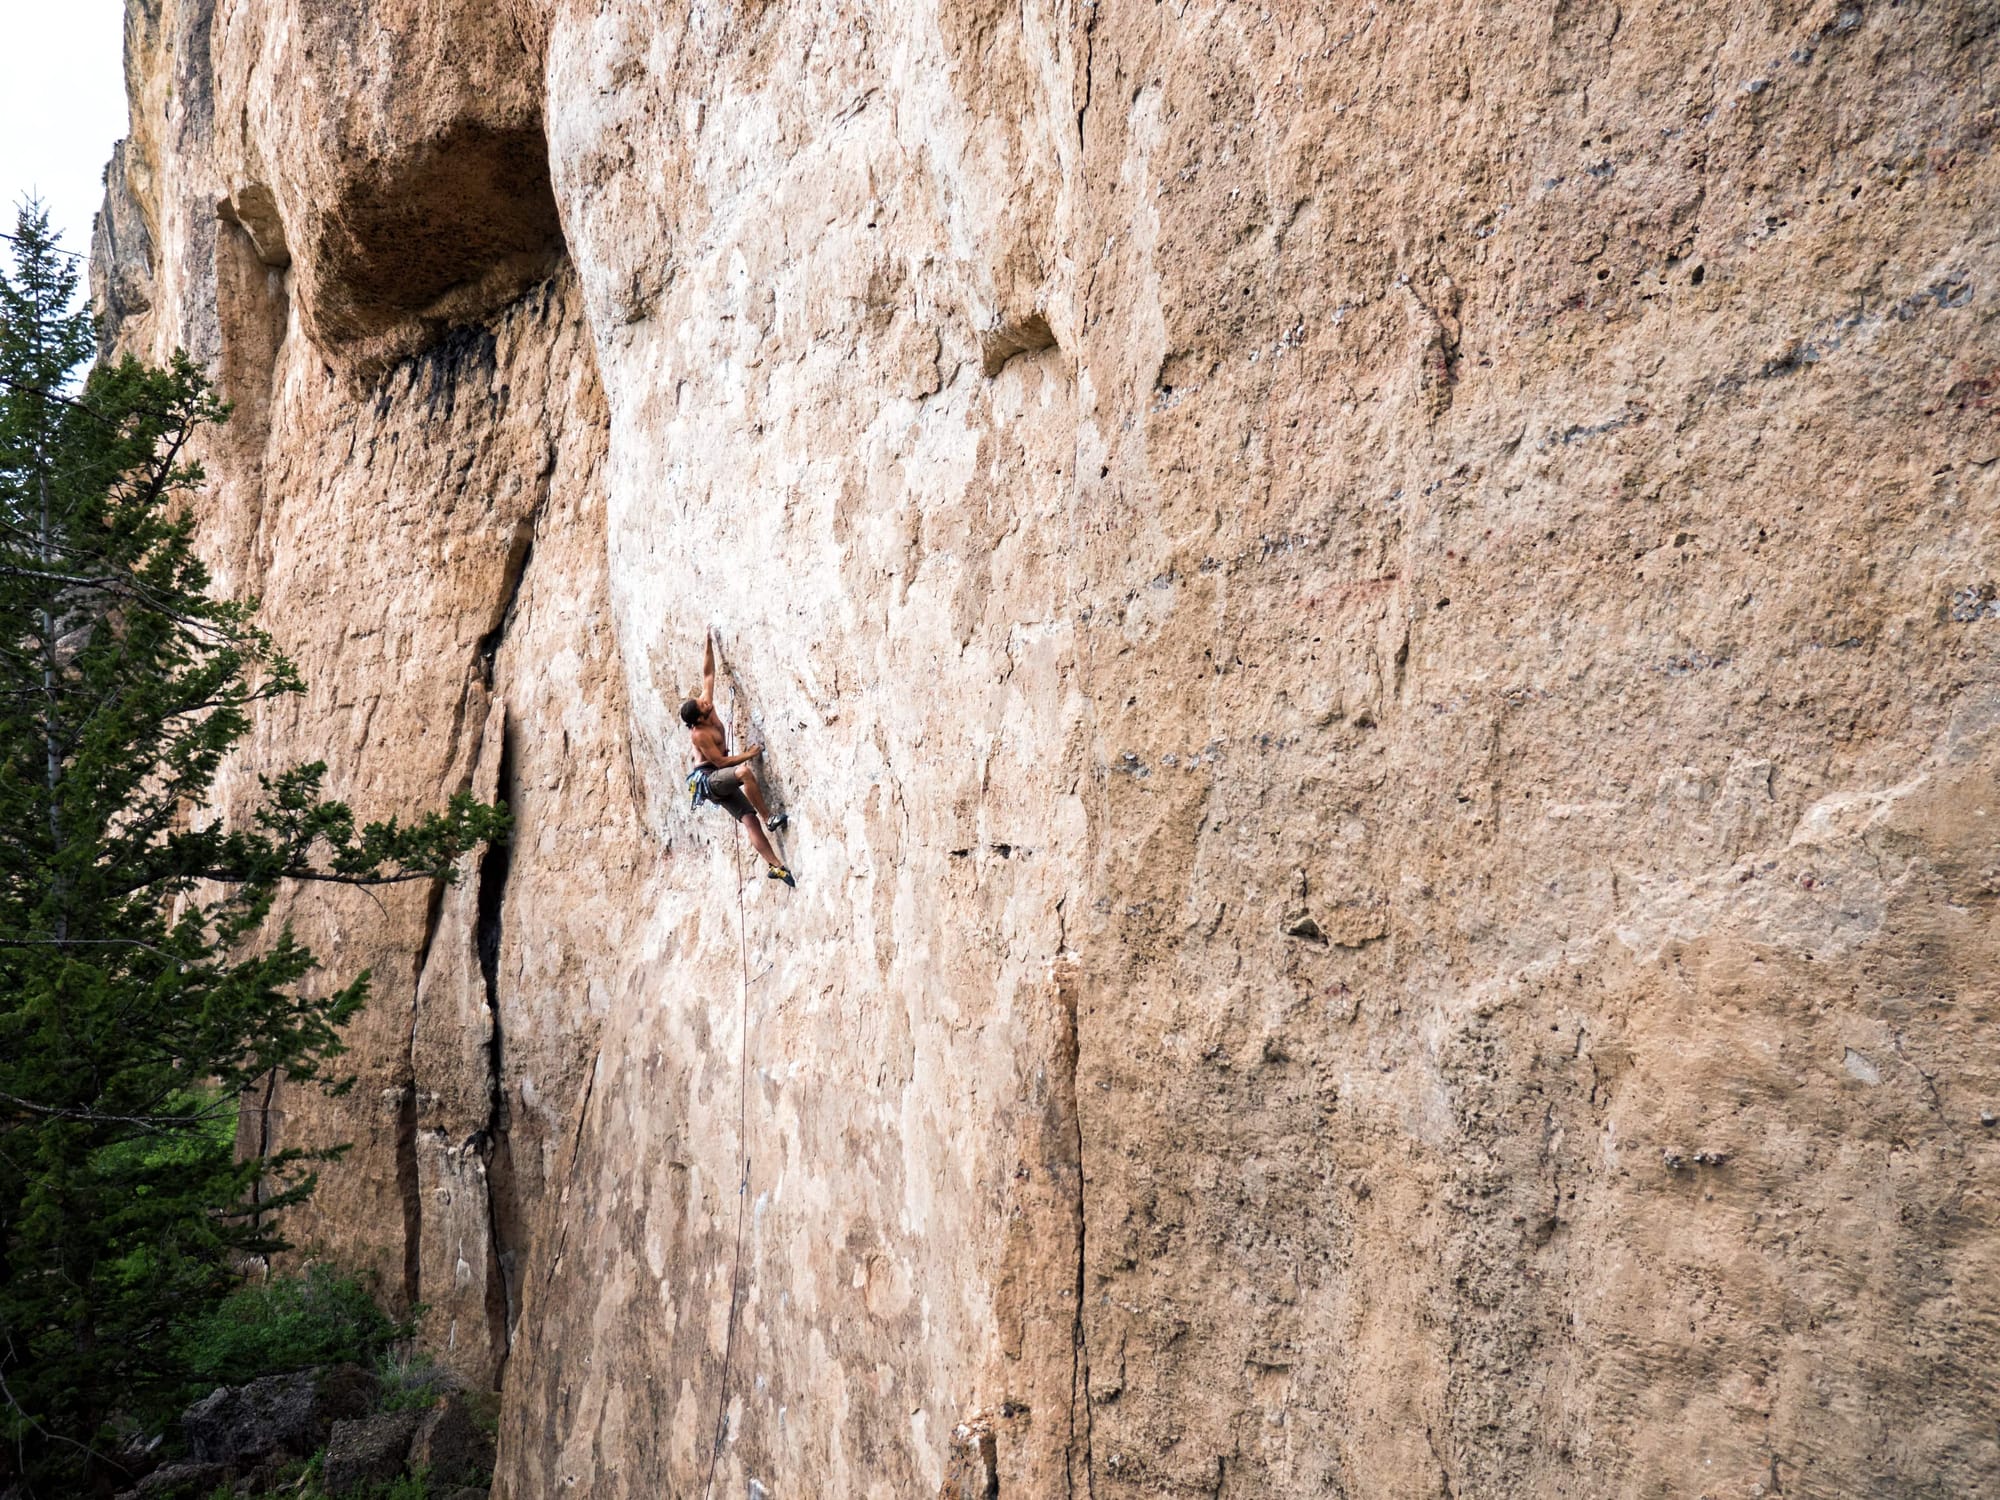 People in Climbing: Matt Enlow